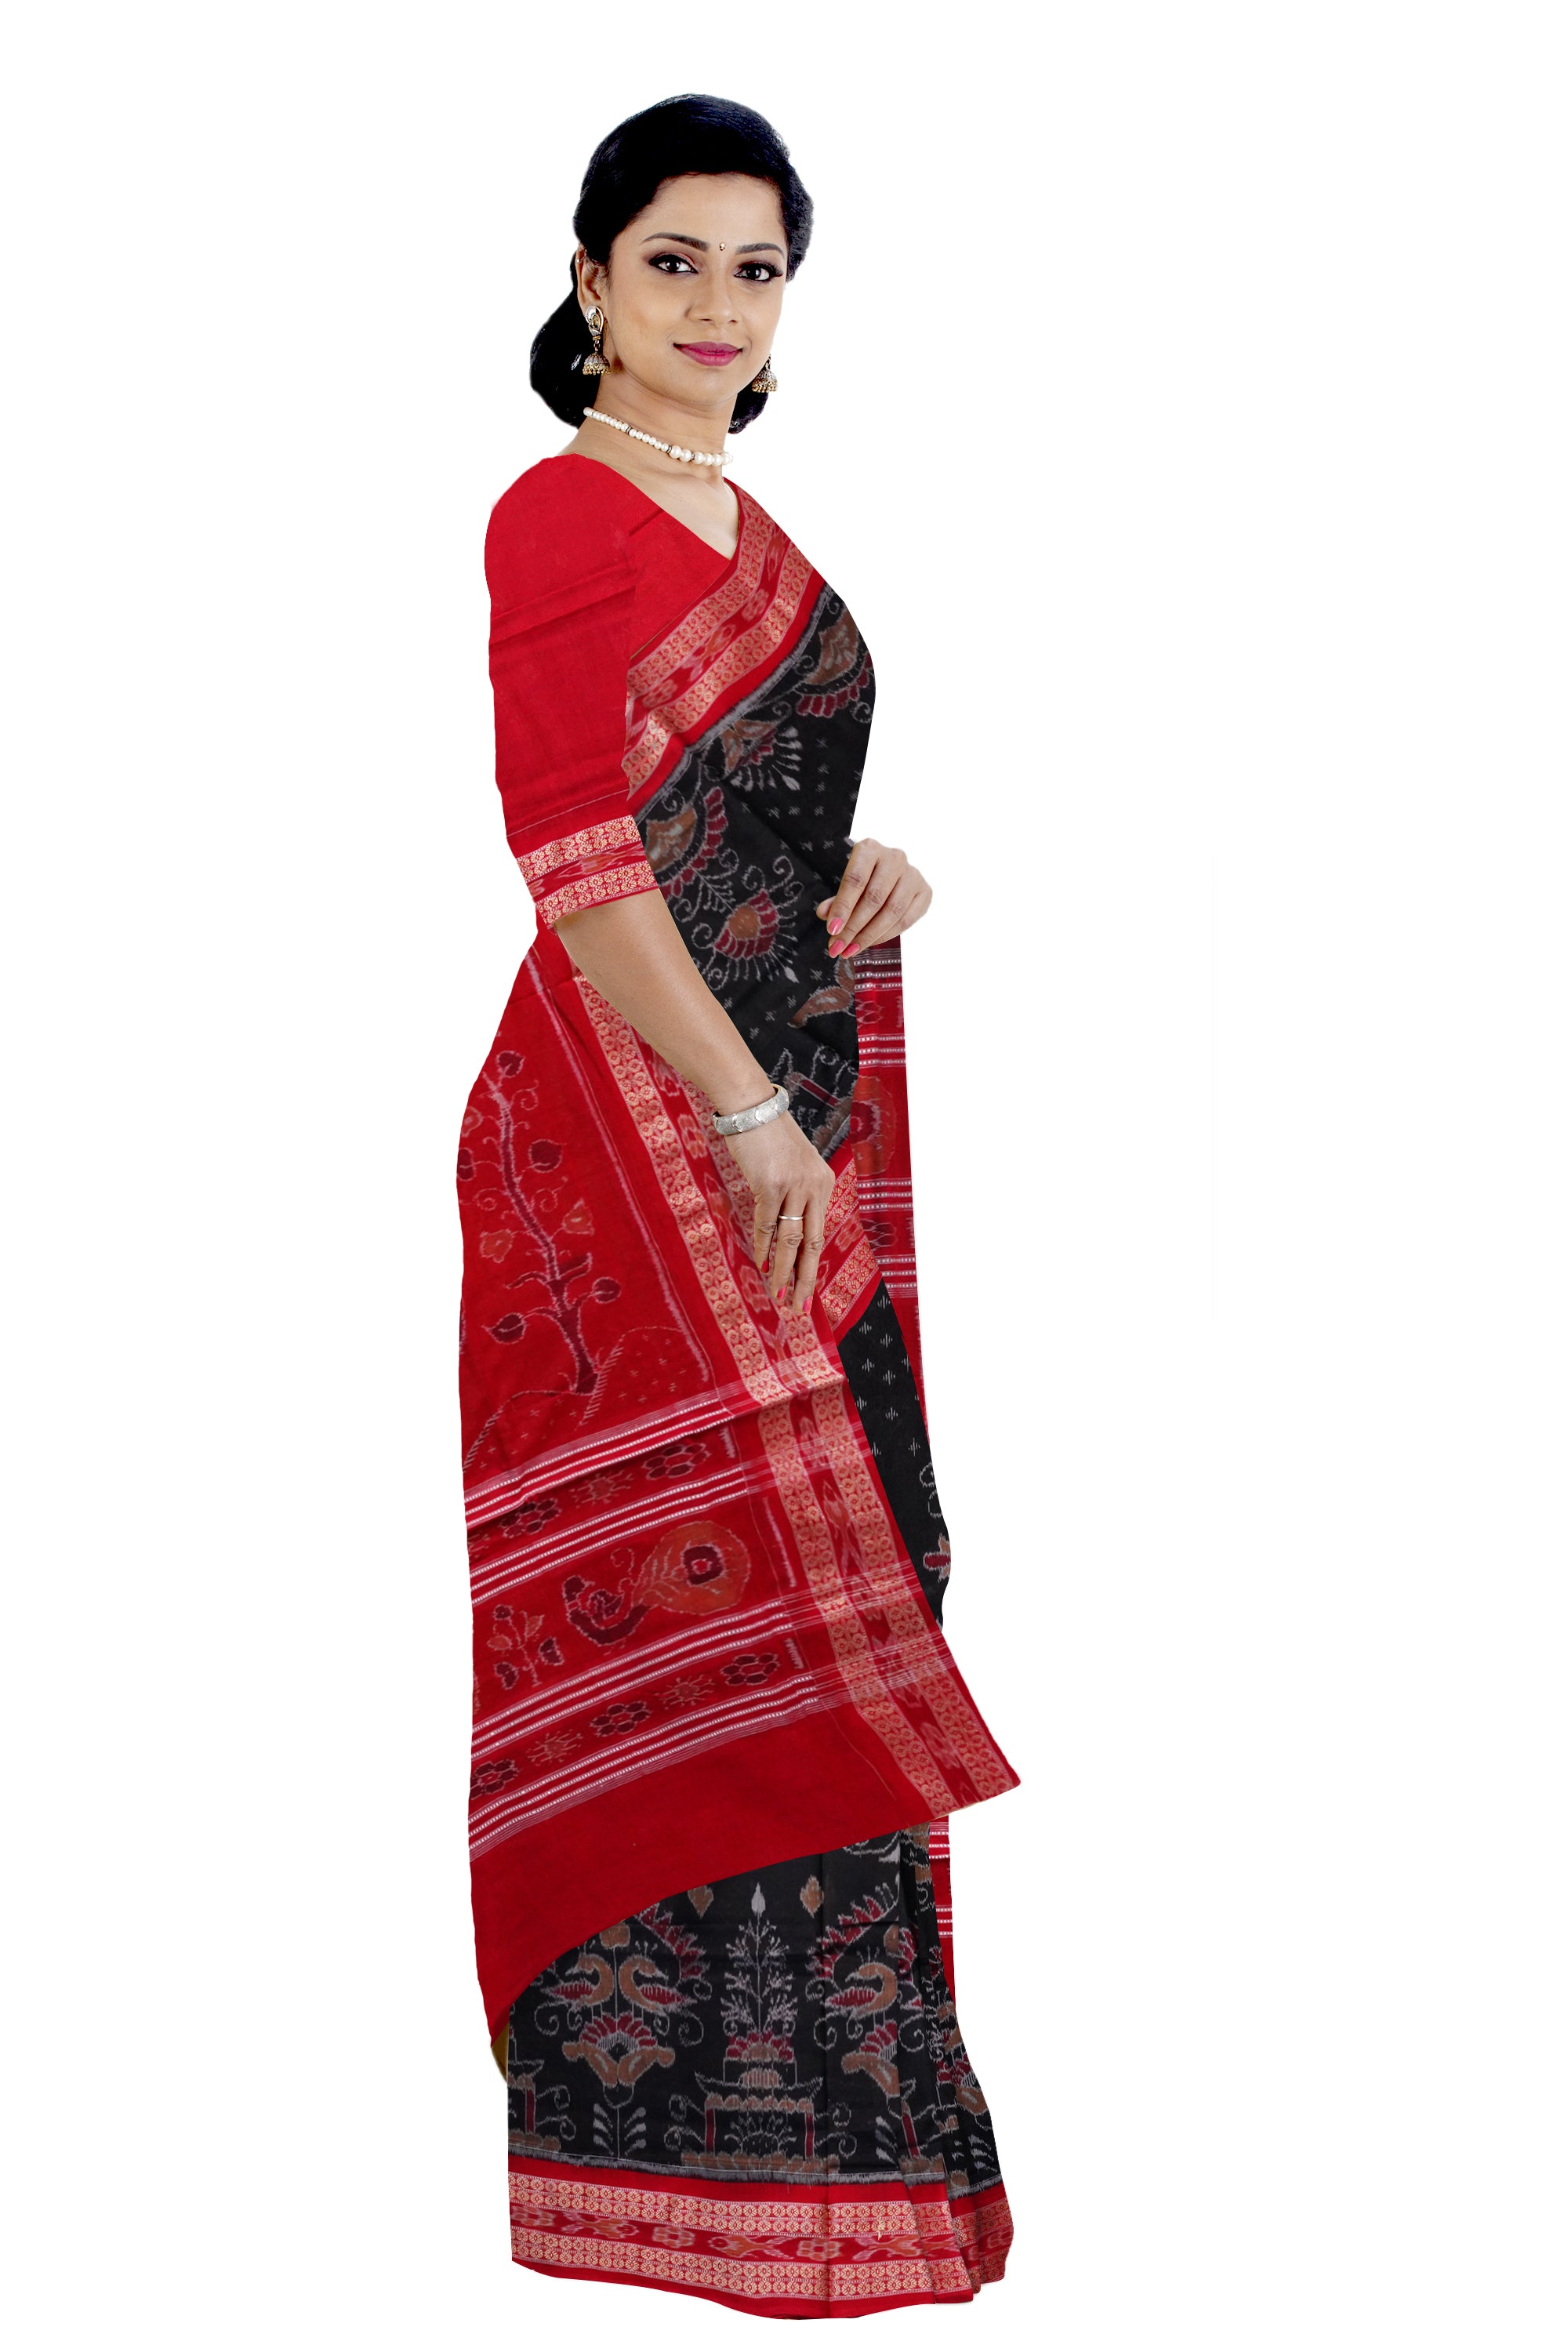 Black and Red color traditional peacock design Sambalpuri  pure cotton saree. - Koshali Arts & Crafts Enterprise